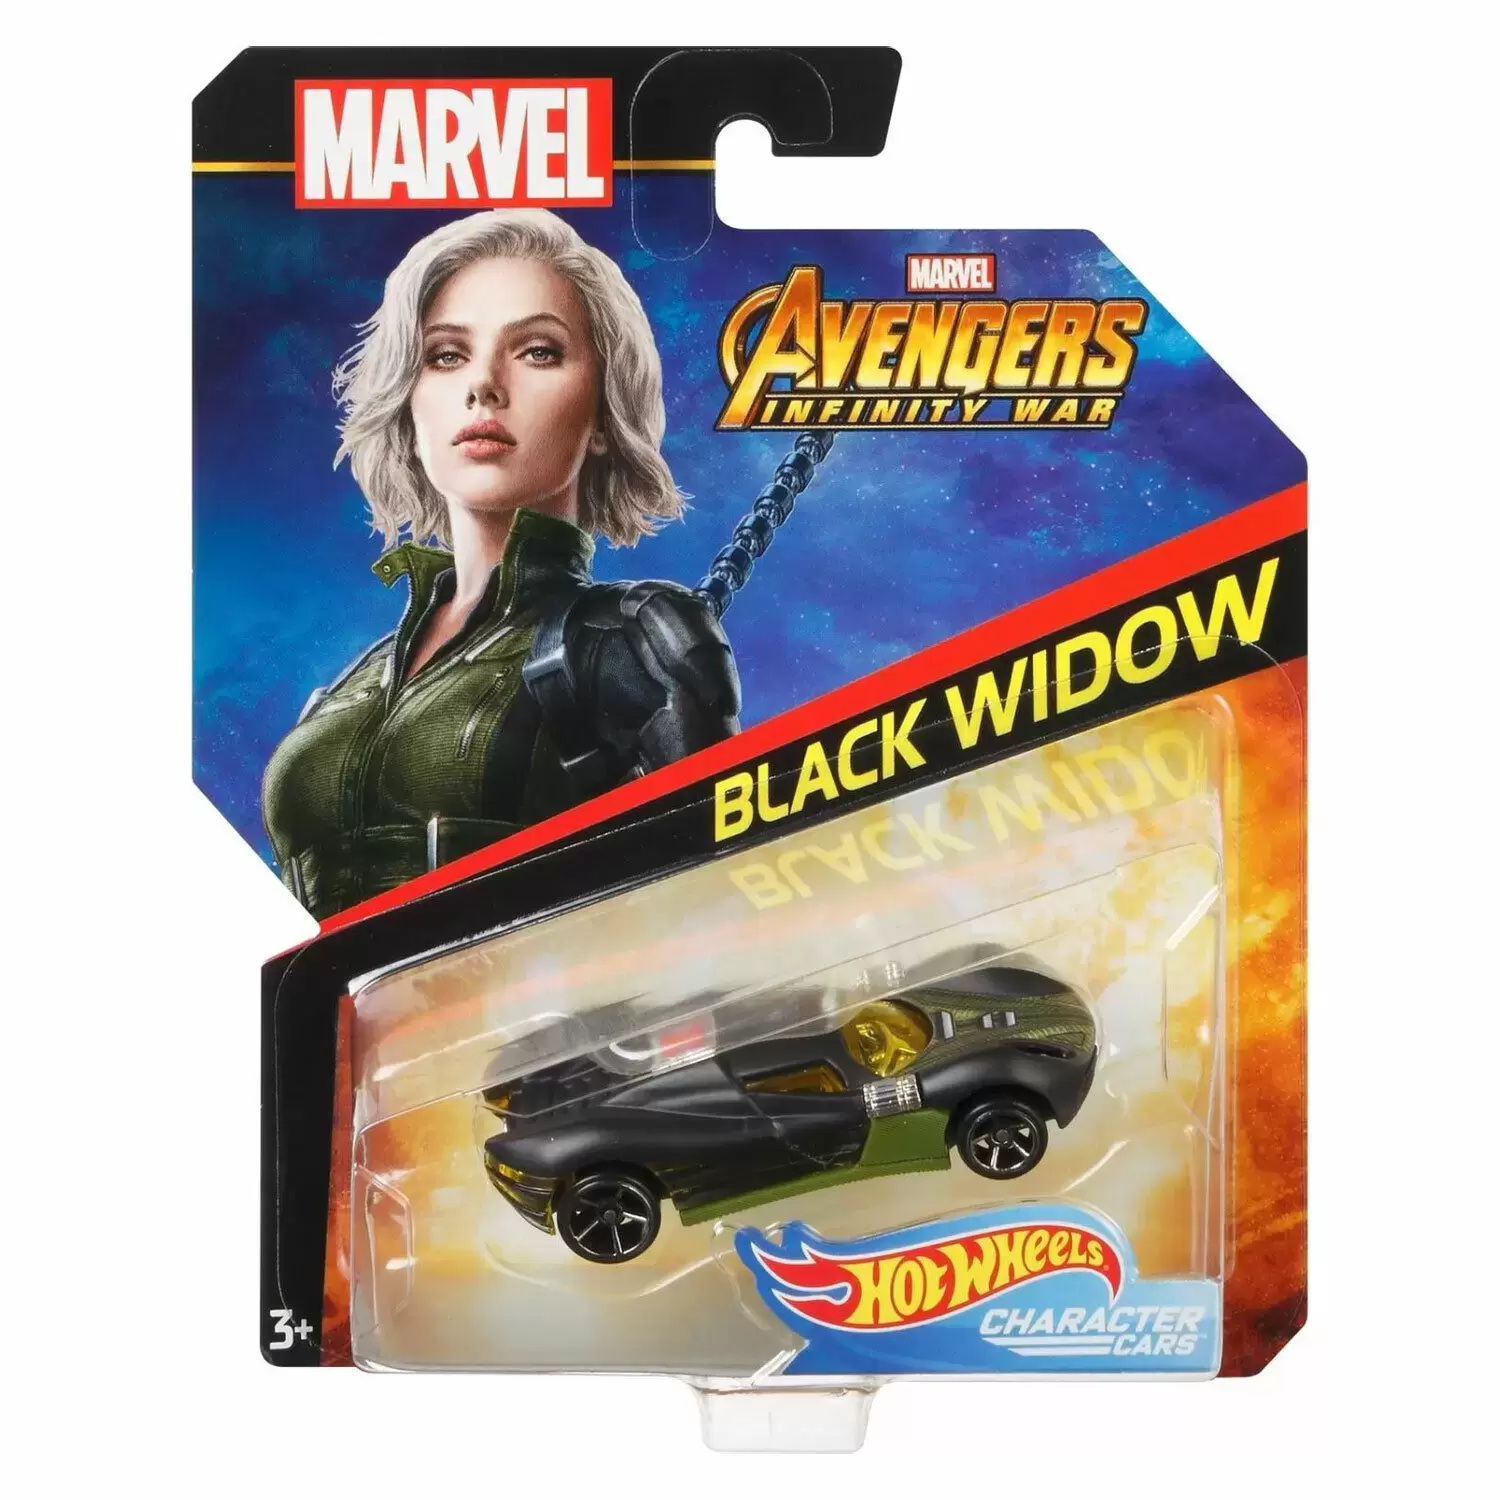 Marvel Character Cars - Avengers Infinity Wars - Black widow